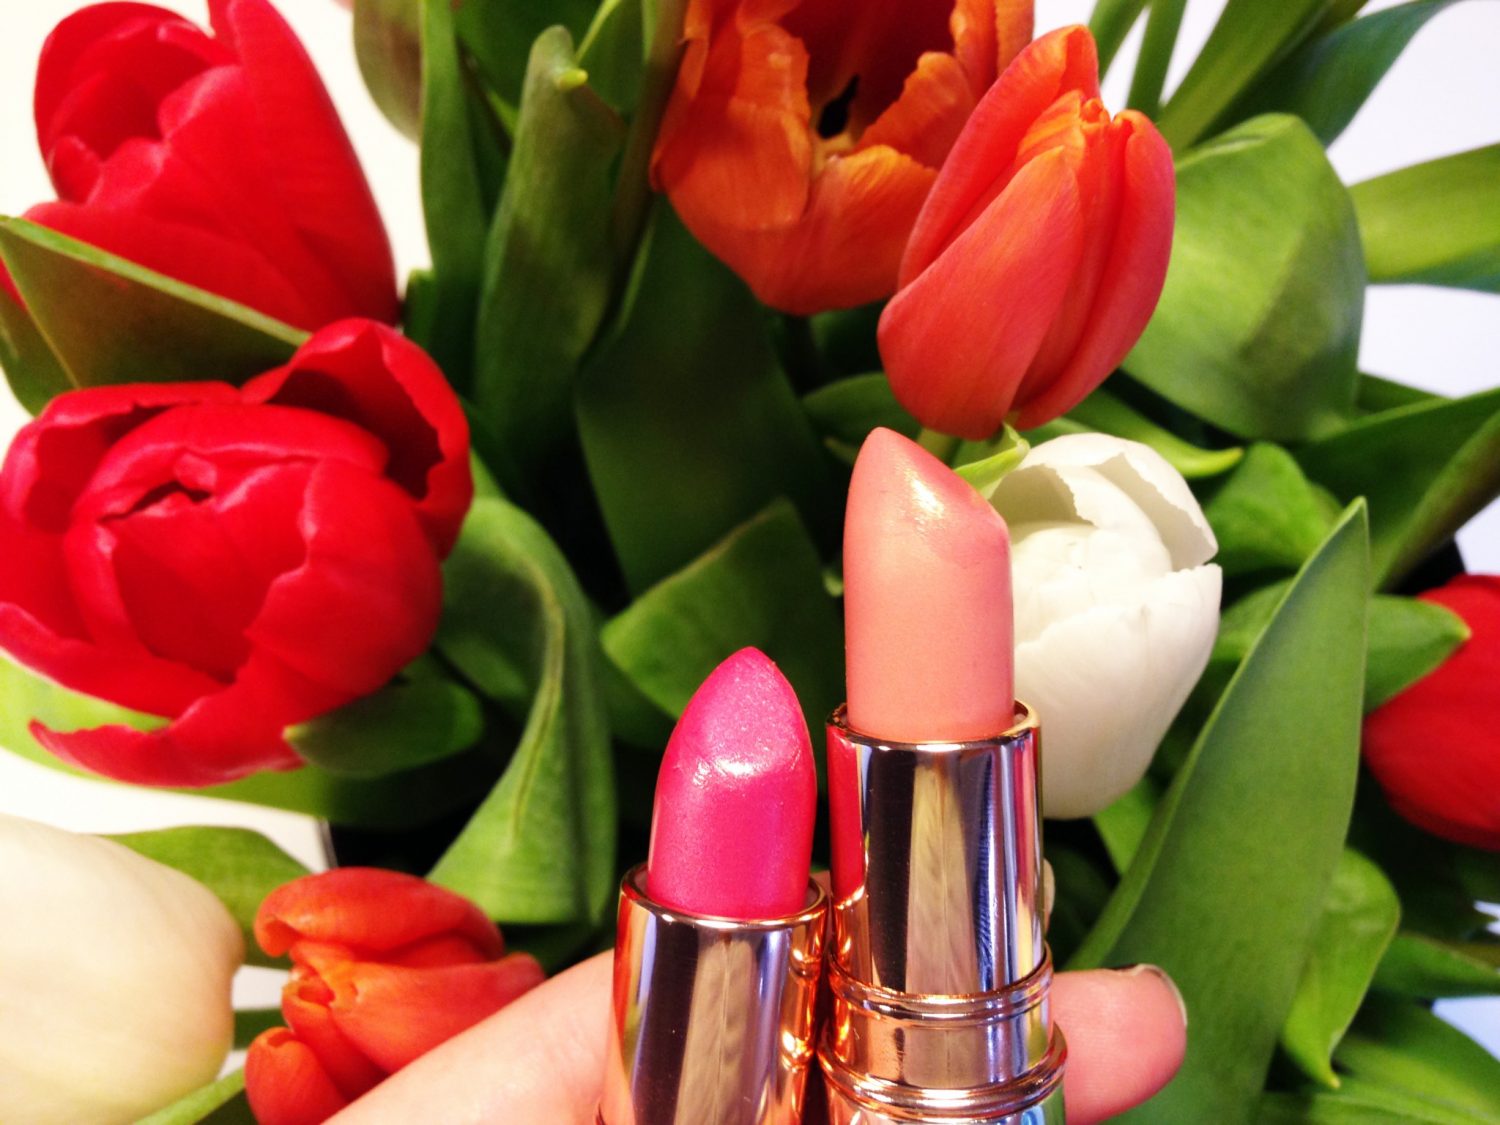 New in: The Body Shop Lipstick